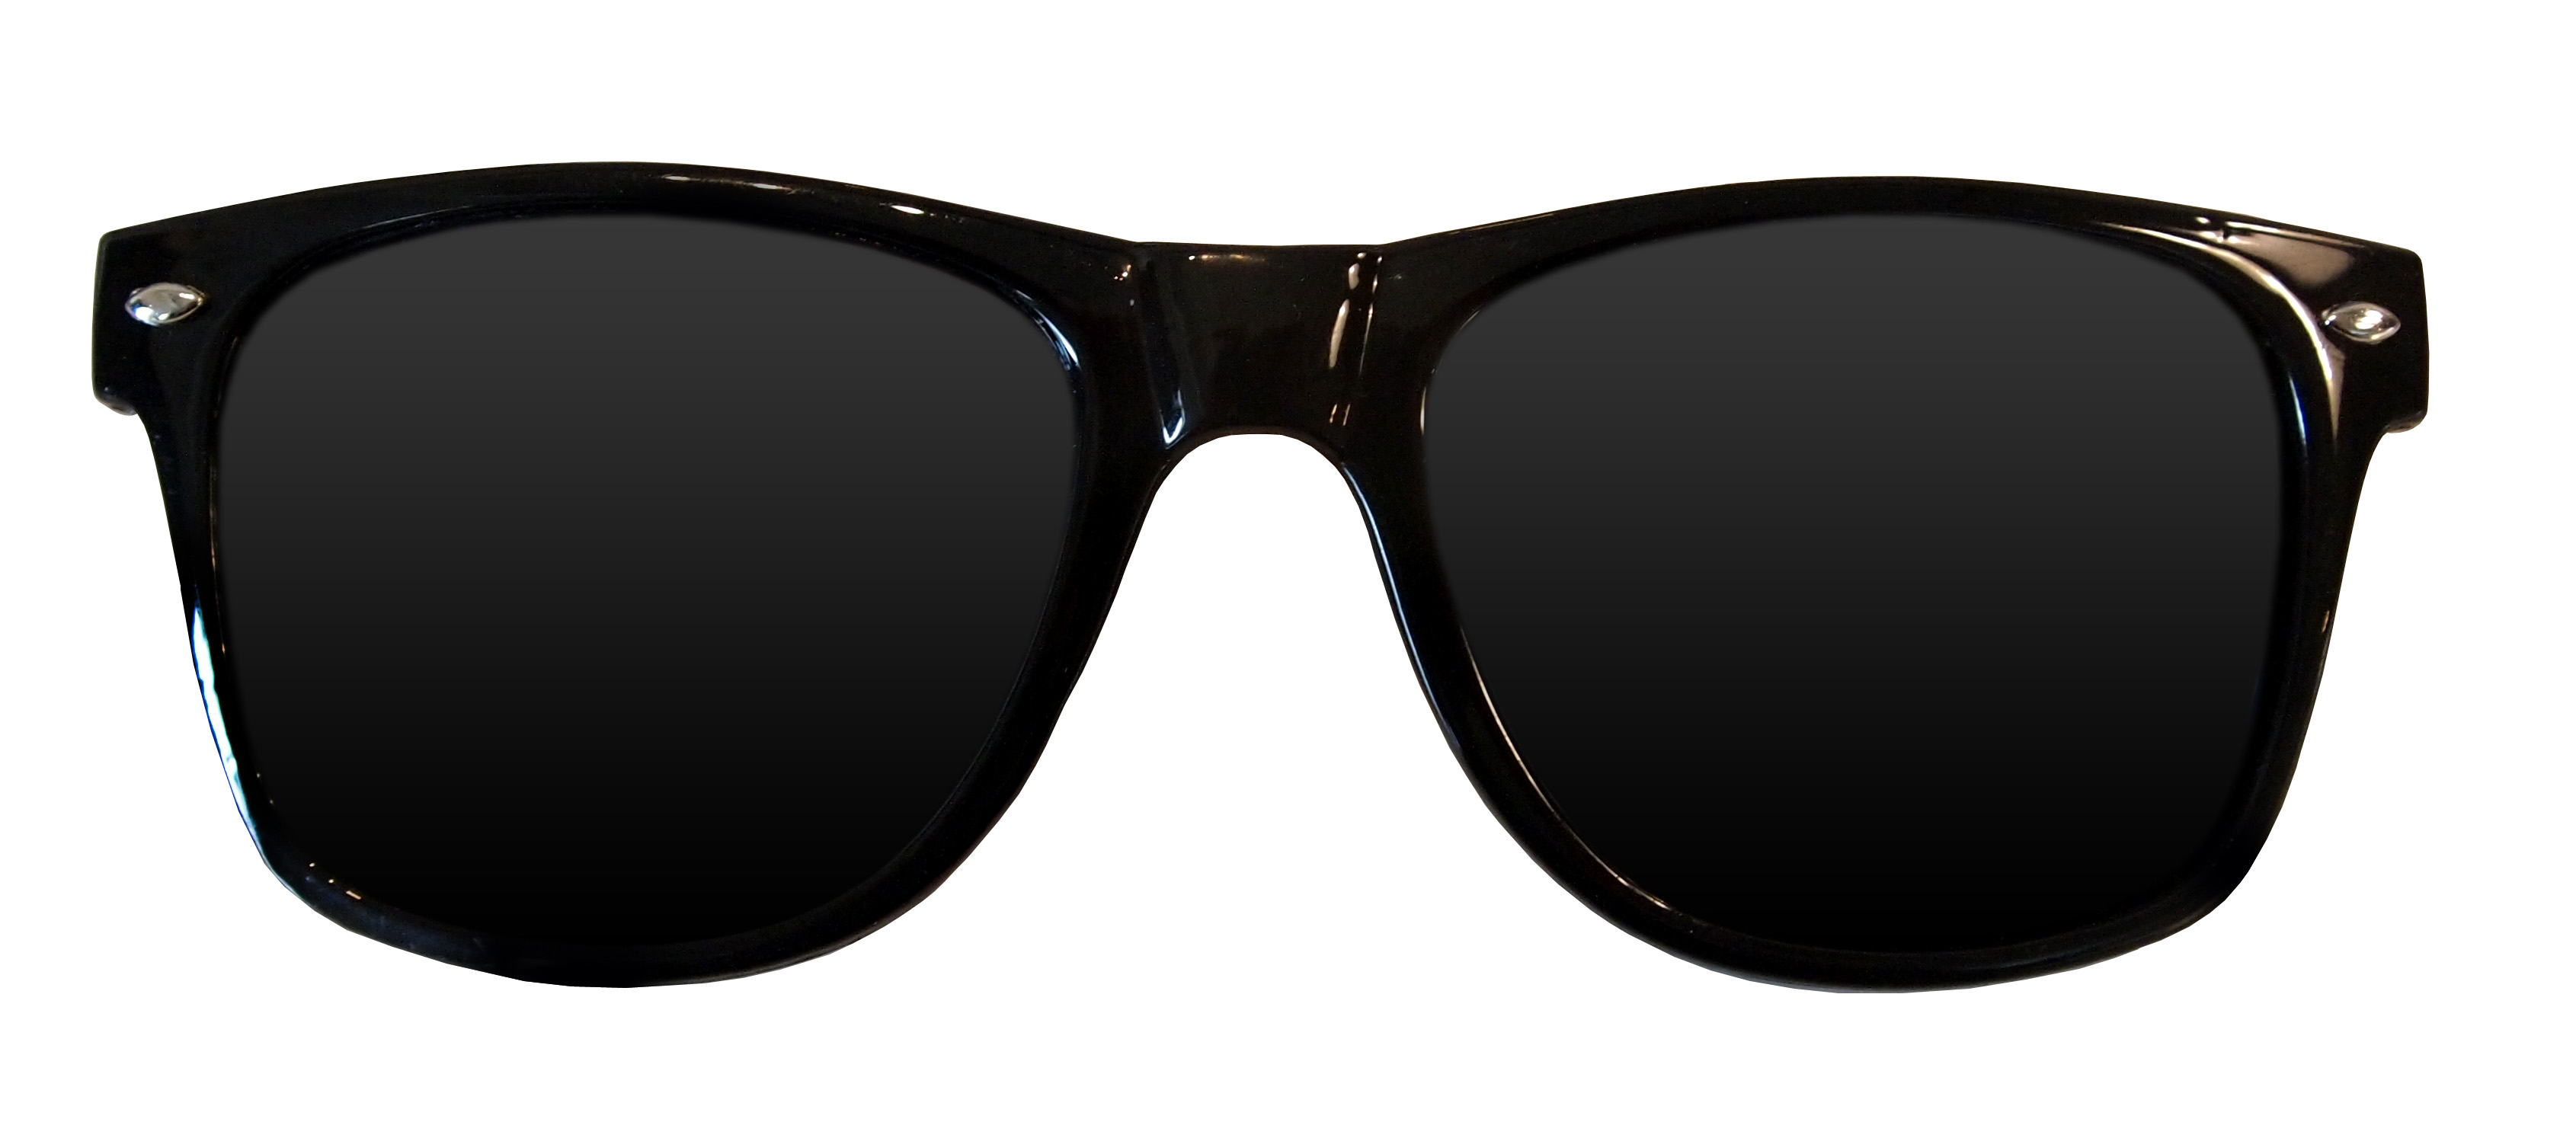 Arriba 68+ imagen ray ban sunglasses png transparent